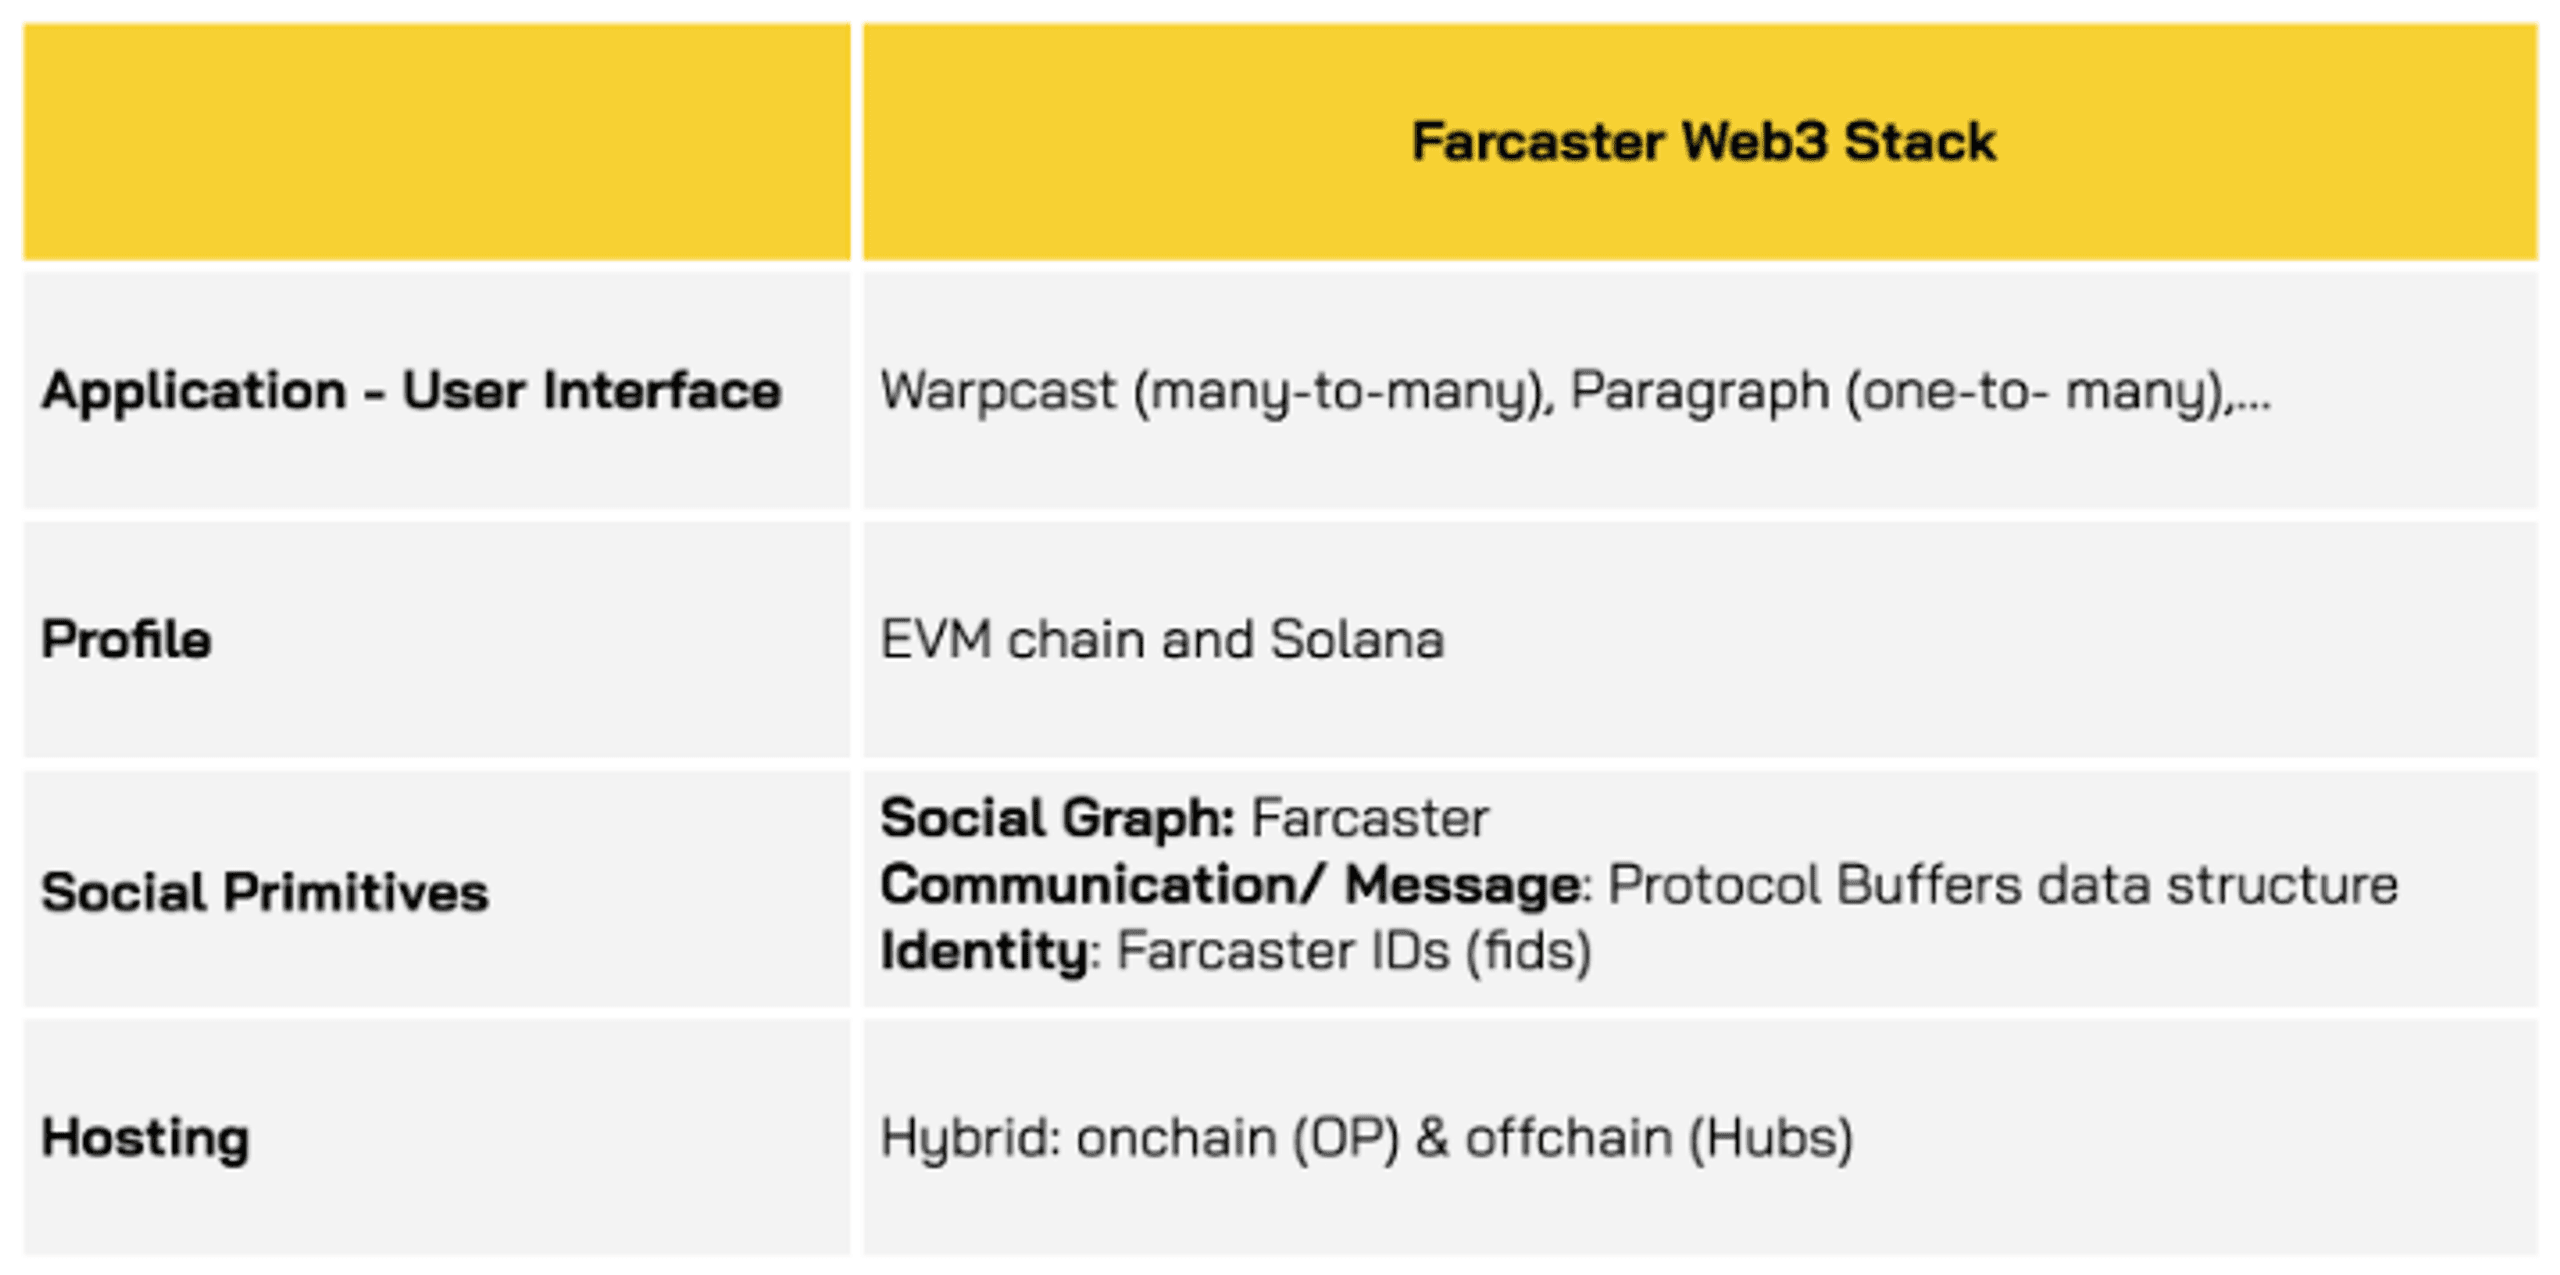 farcaster web3 stack